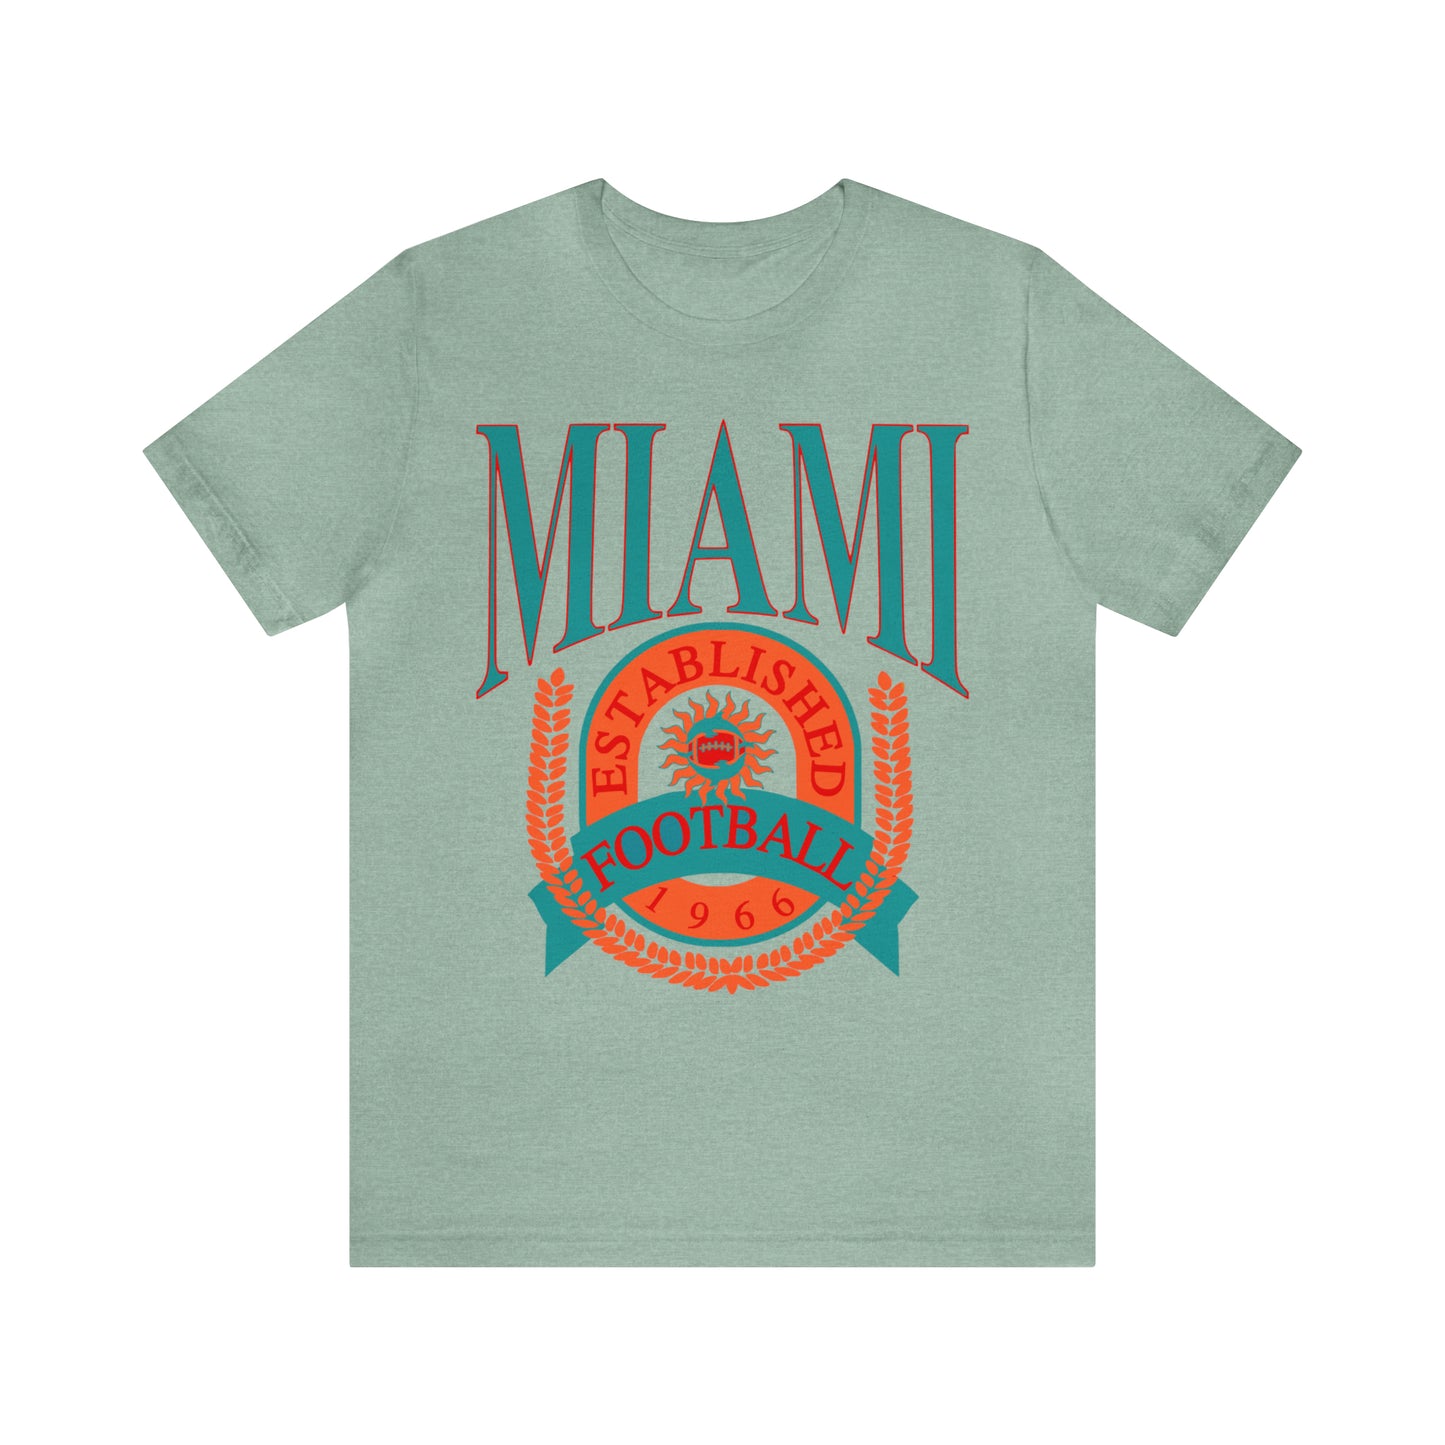 Vintage Miami Dolphins Football Tee  - Vintage Style Football Crewneck - Men's & Women's Football Apparel - Design 1